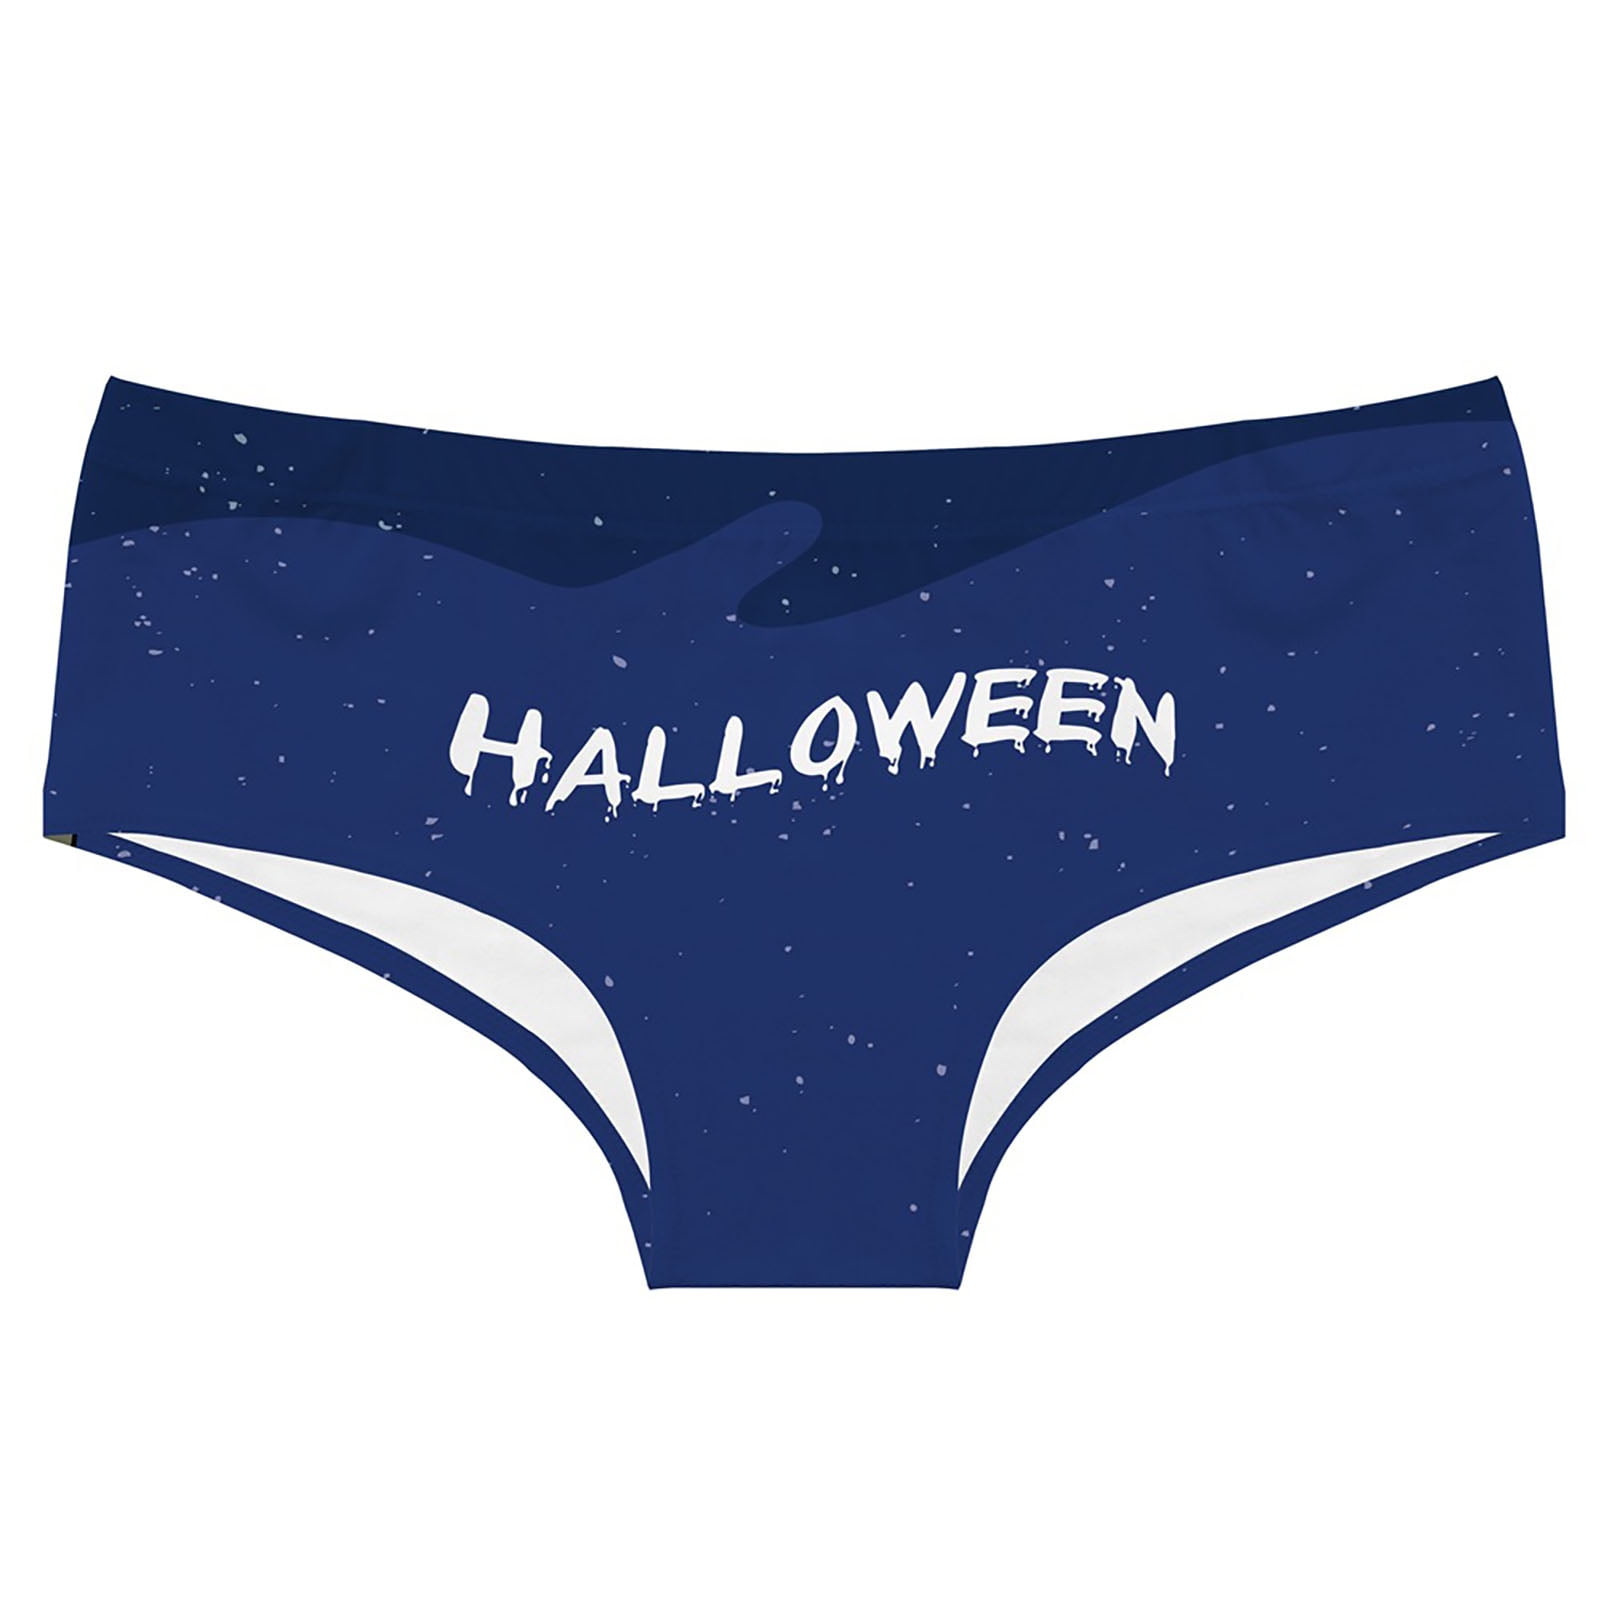 harmtty Low-Rise Elastic Waist Stretchy Women Panties Halloween